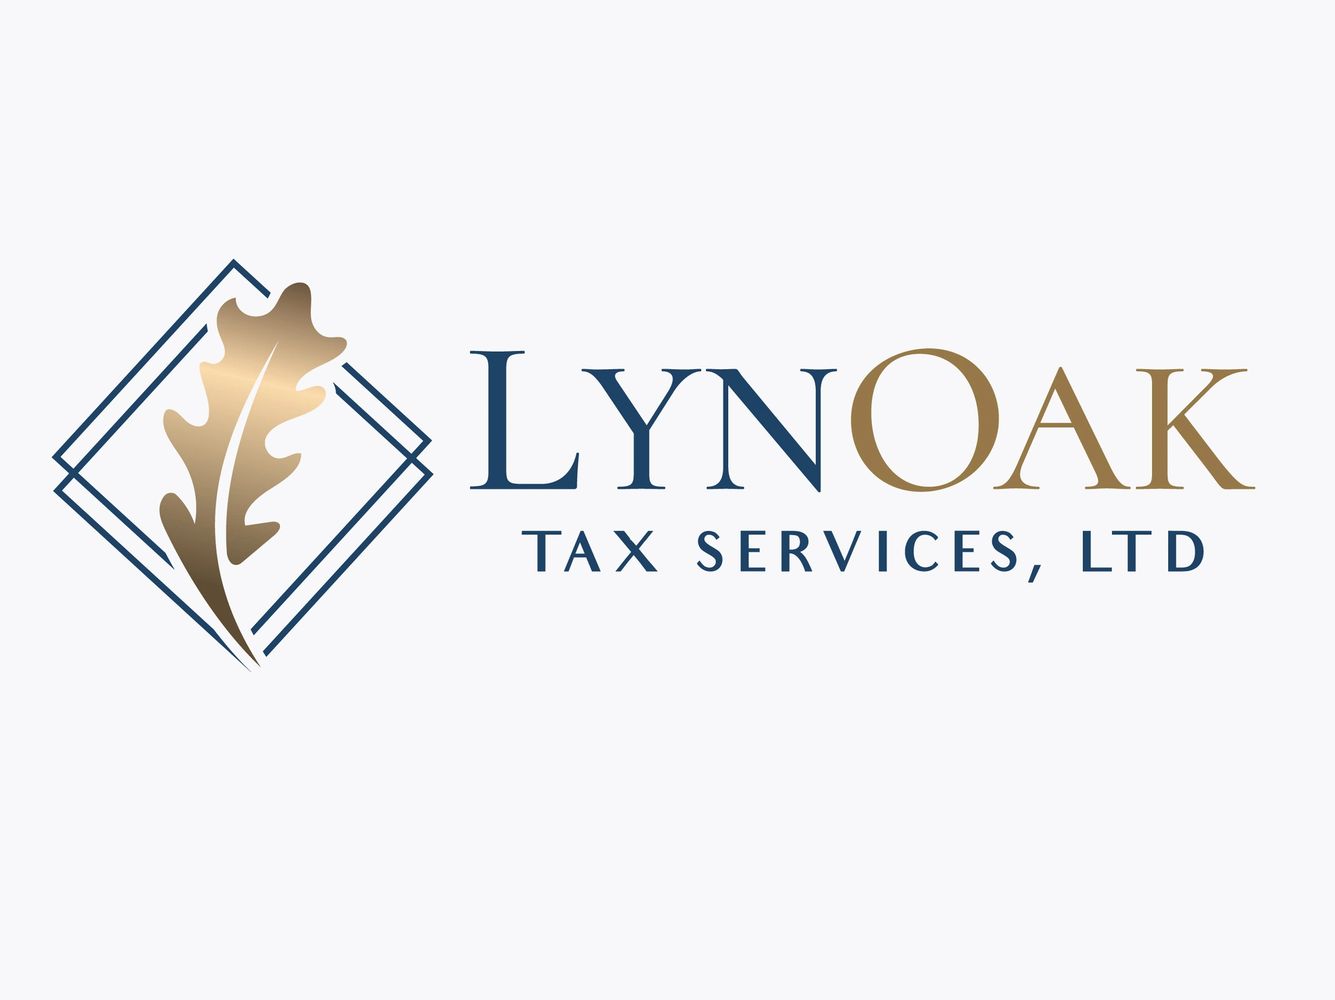 LynOak Tax Services, ltd